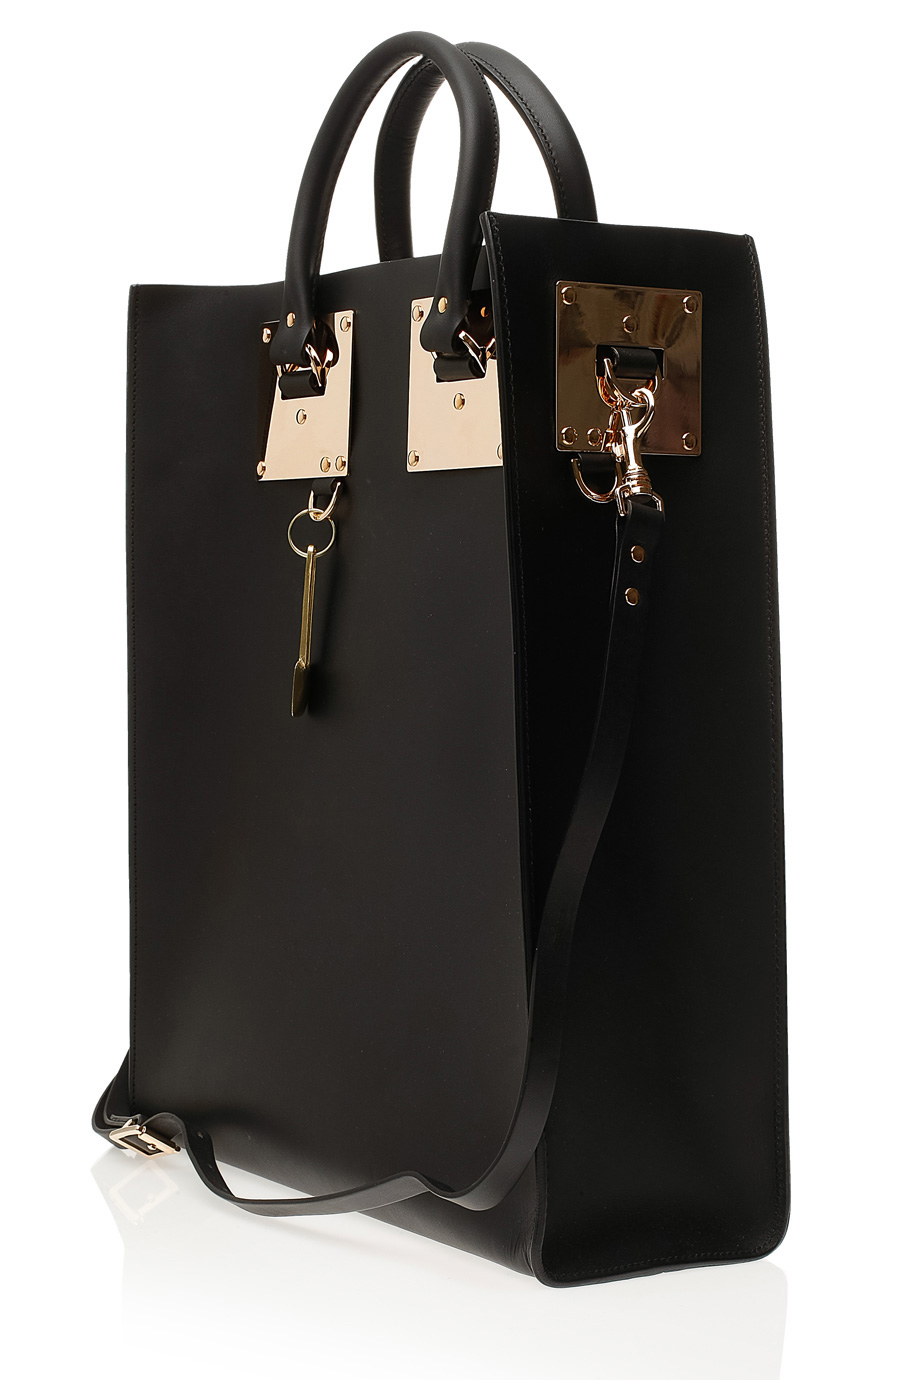 Lyst - Sophie Hulme Large Classic Tote Bag in Black